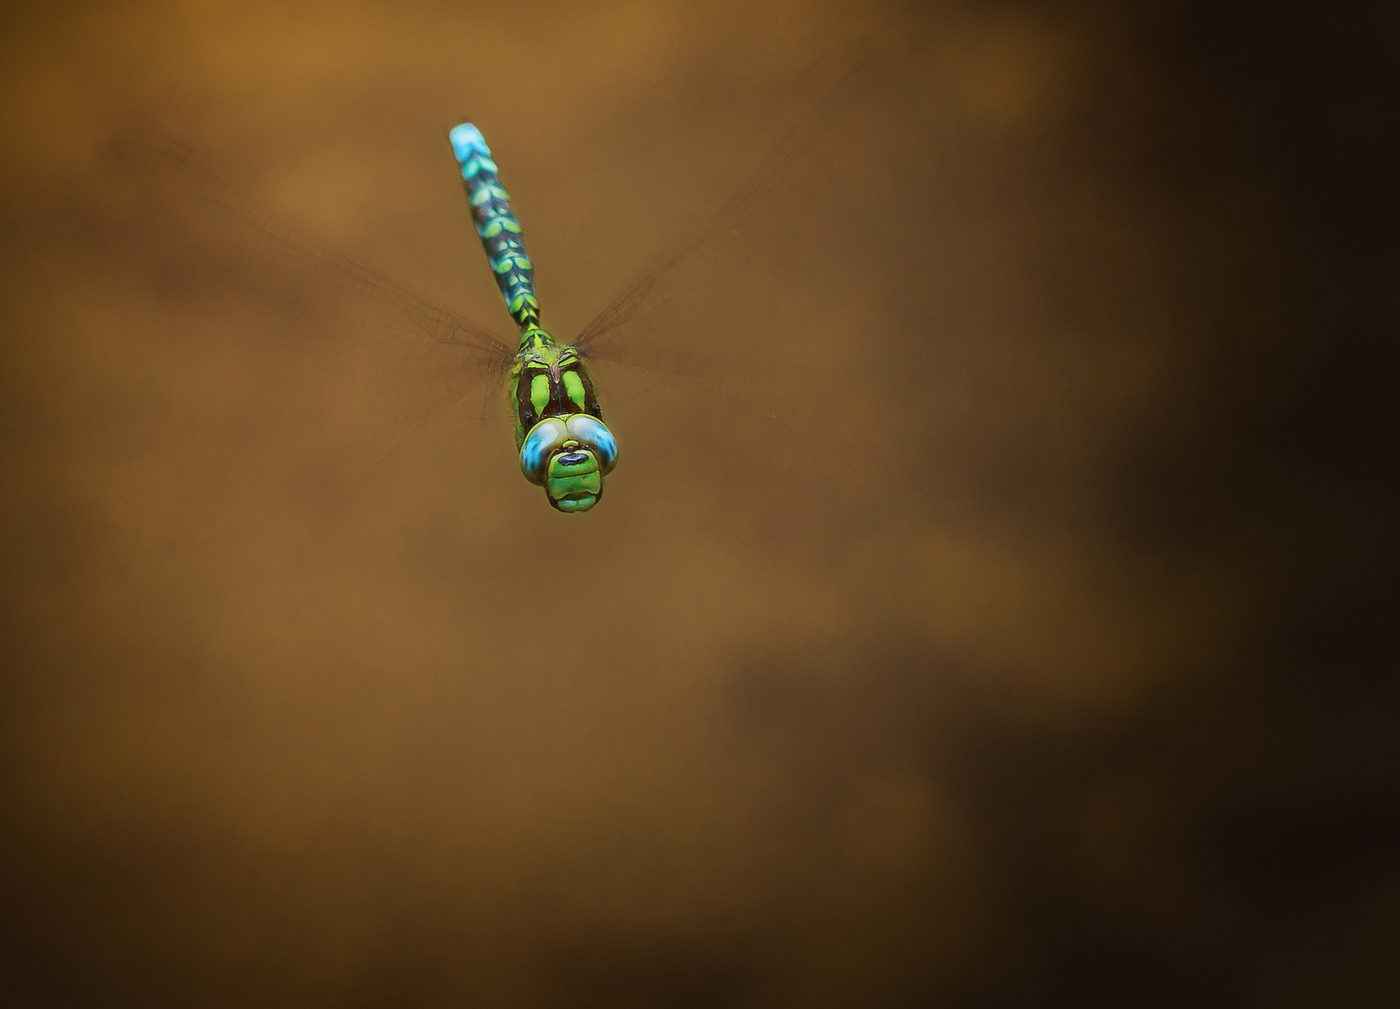 Dragonfly lidojumā